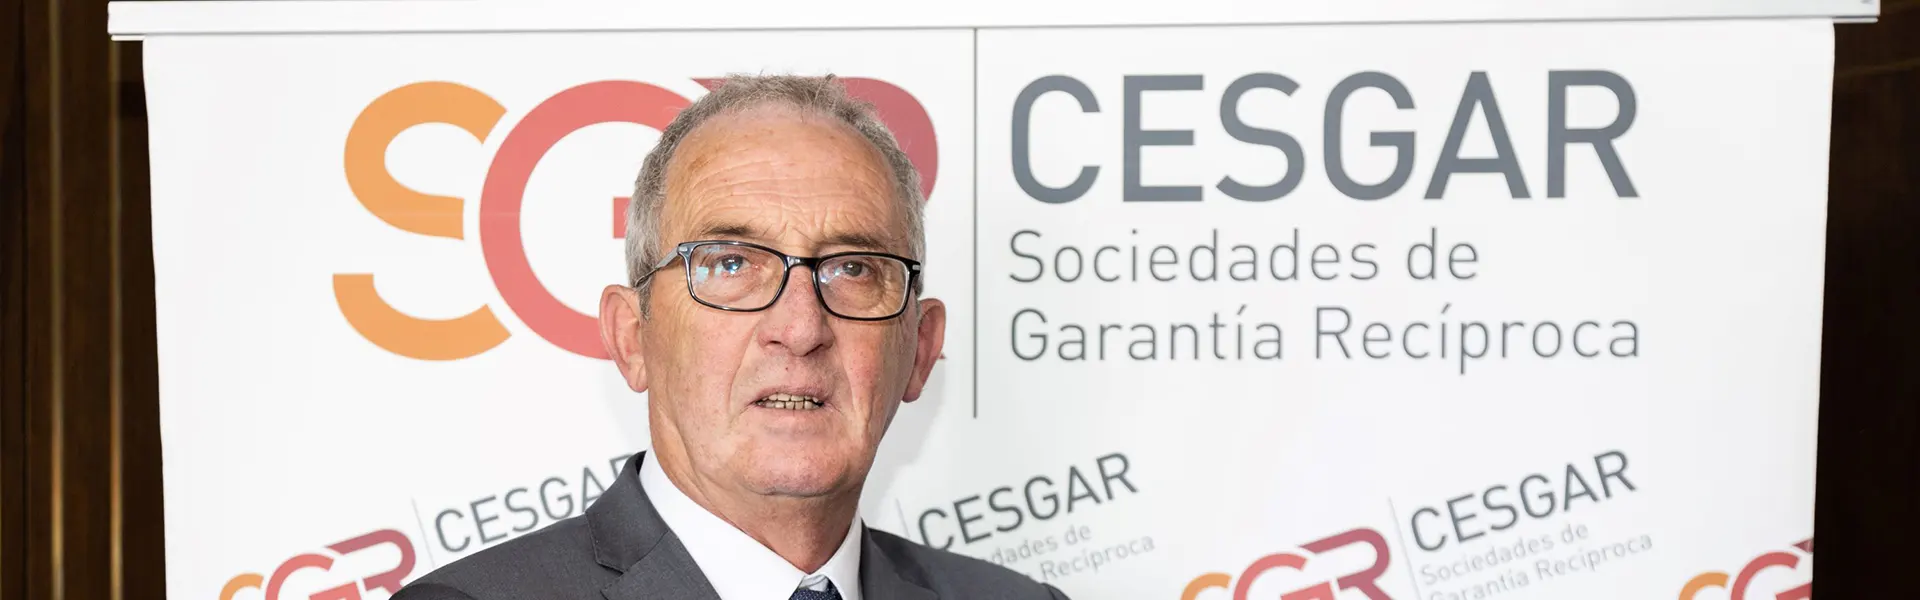 José Pedro Salcedo presidente SGR Cesgar